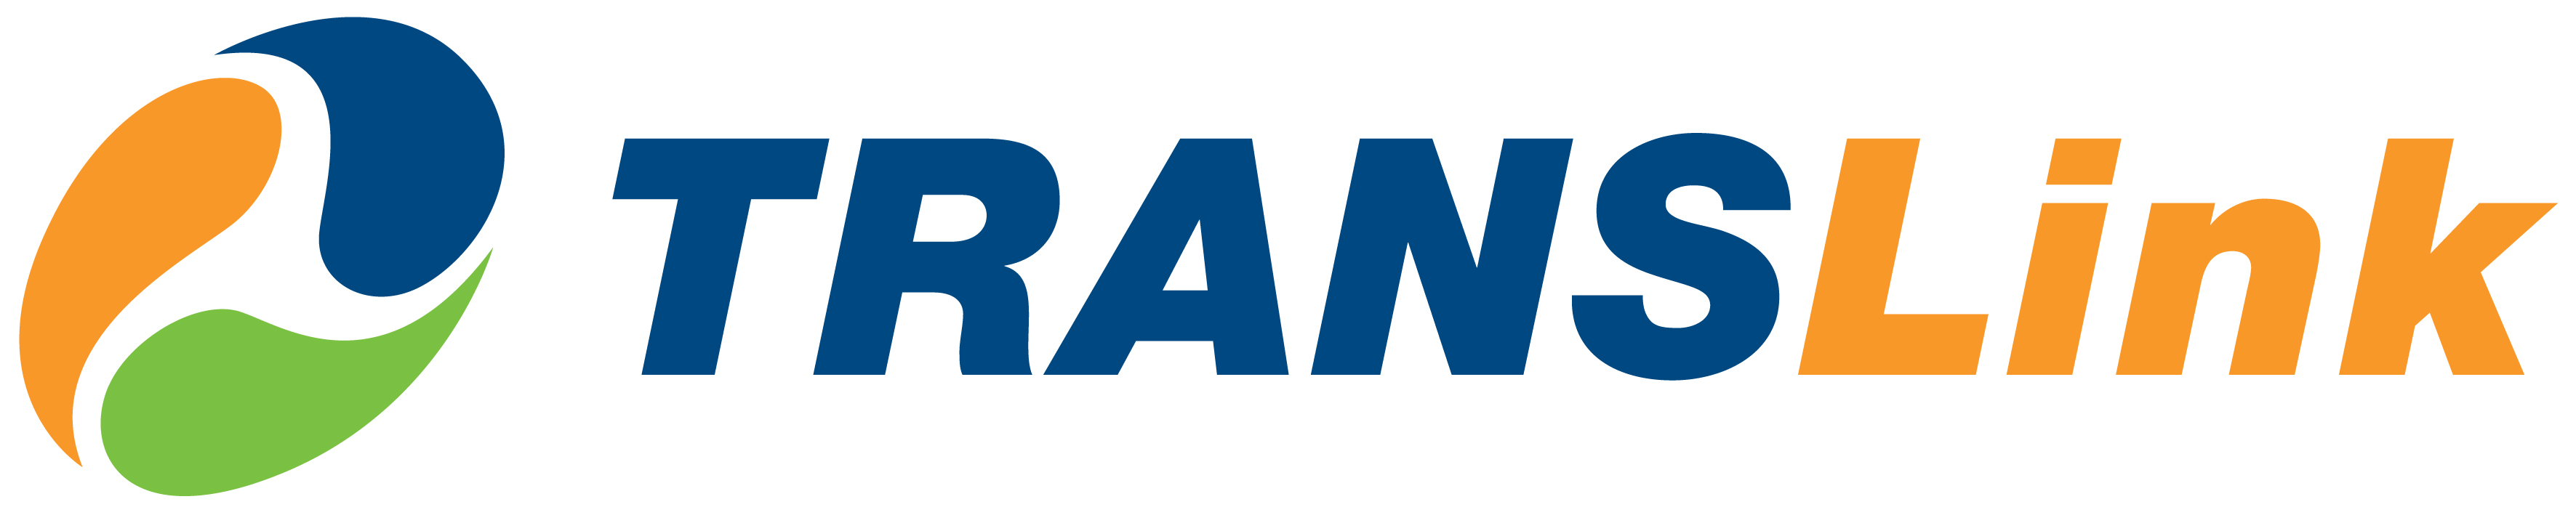 Company logo for TransLink